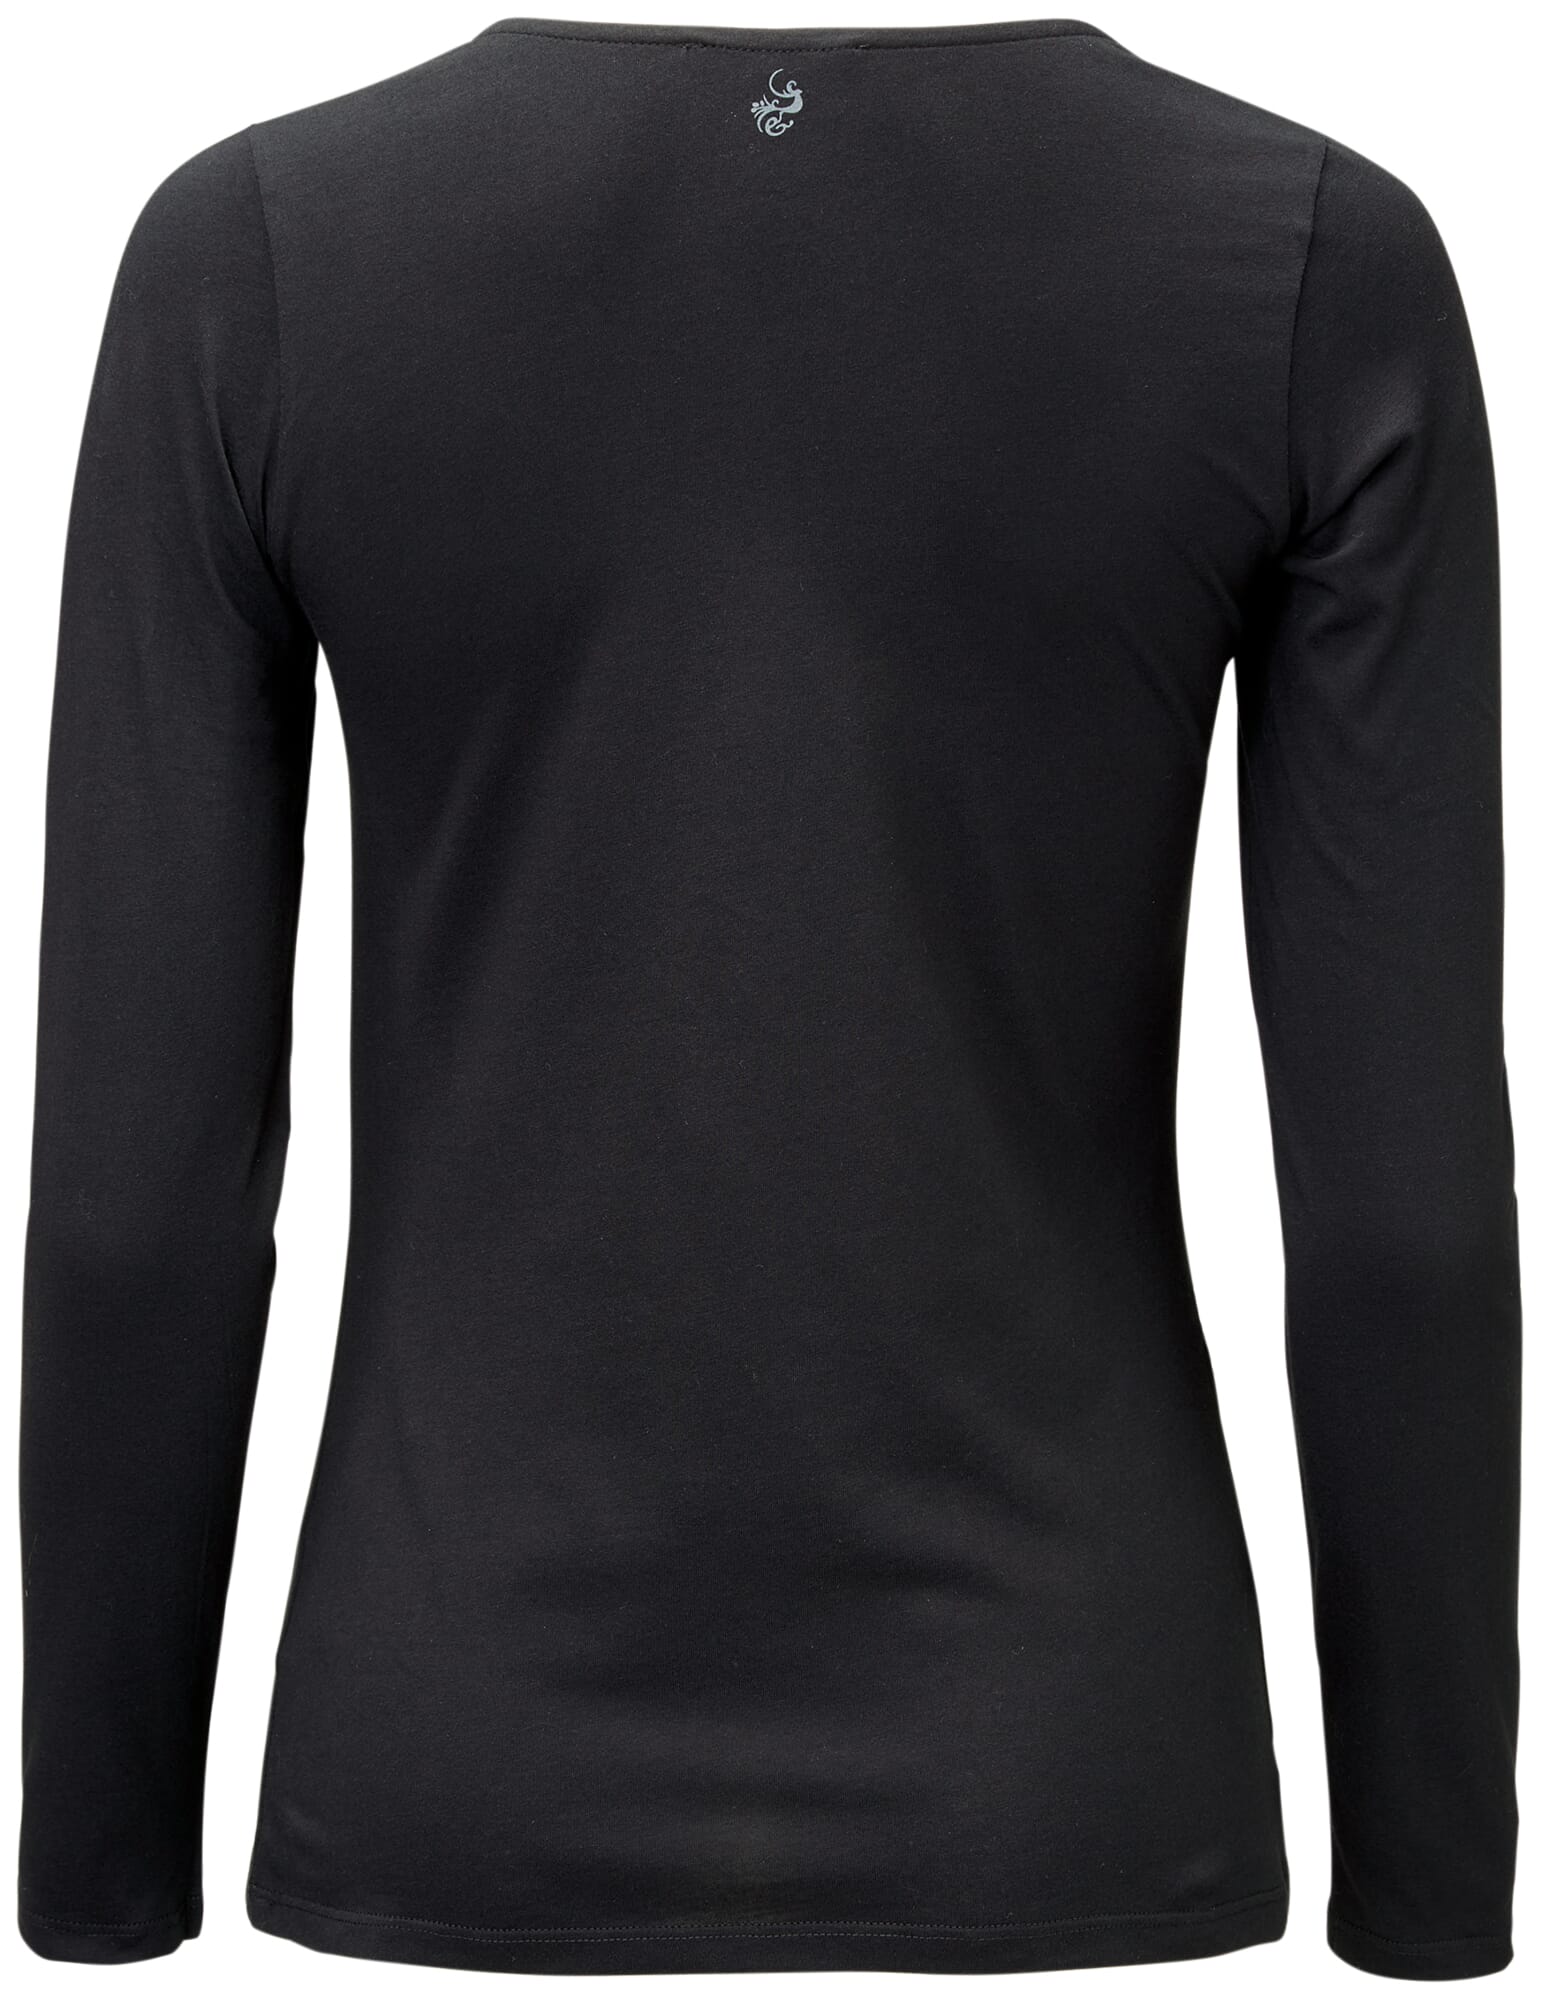 Ladies shirt Cascade, Black | Manufactum